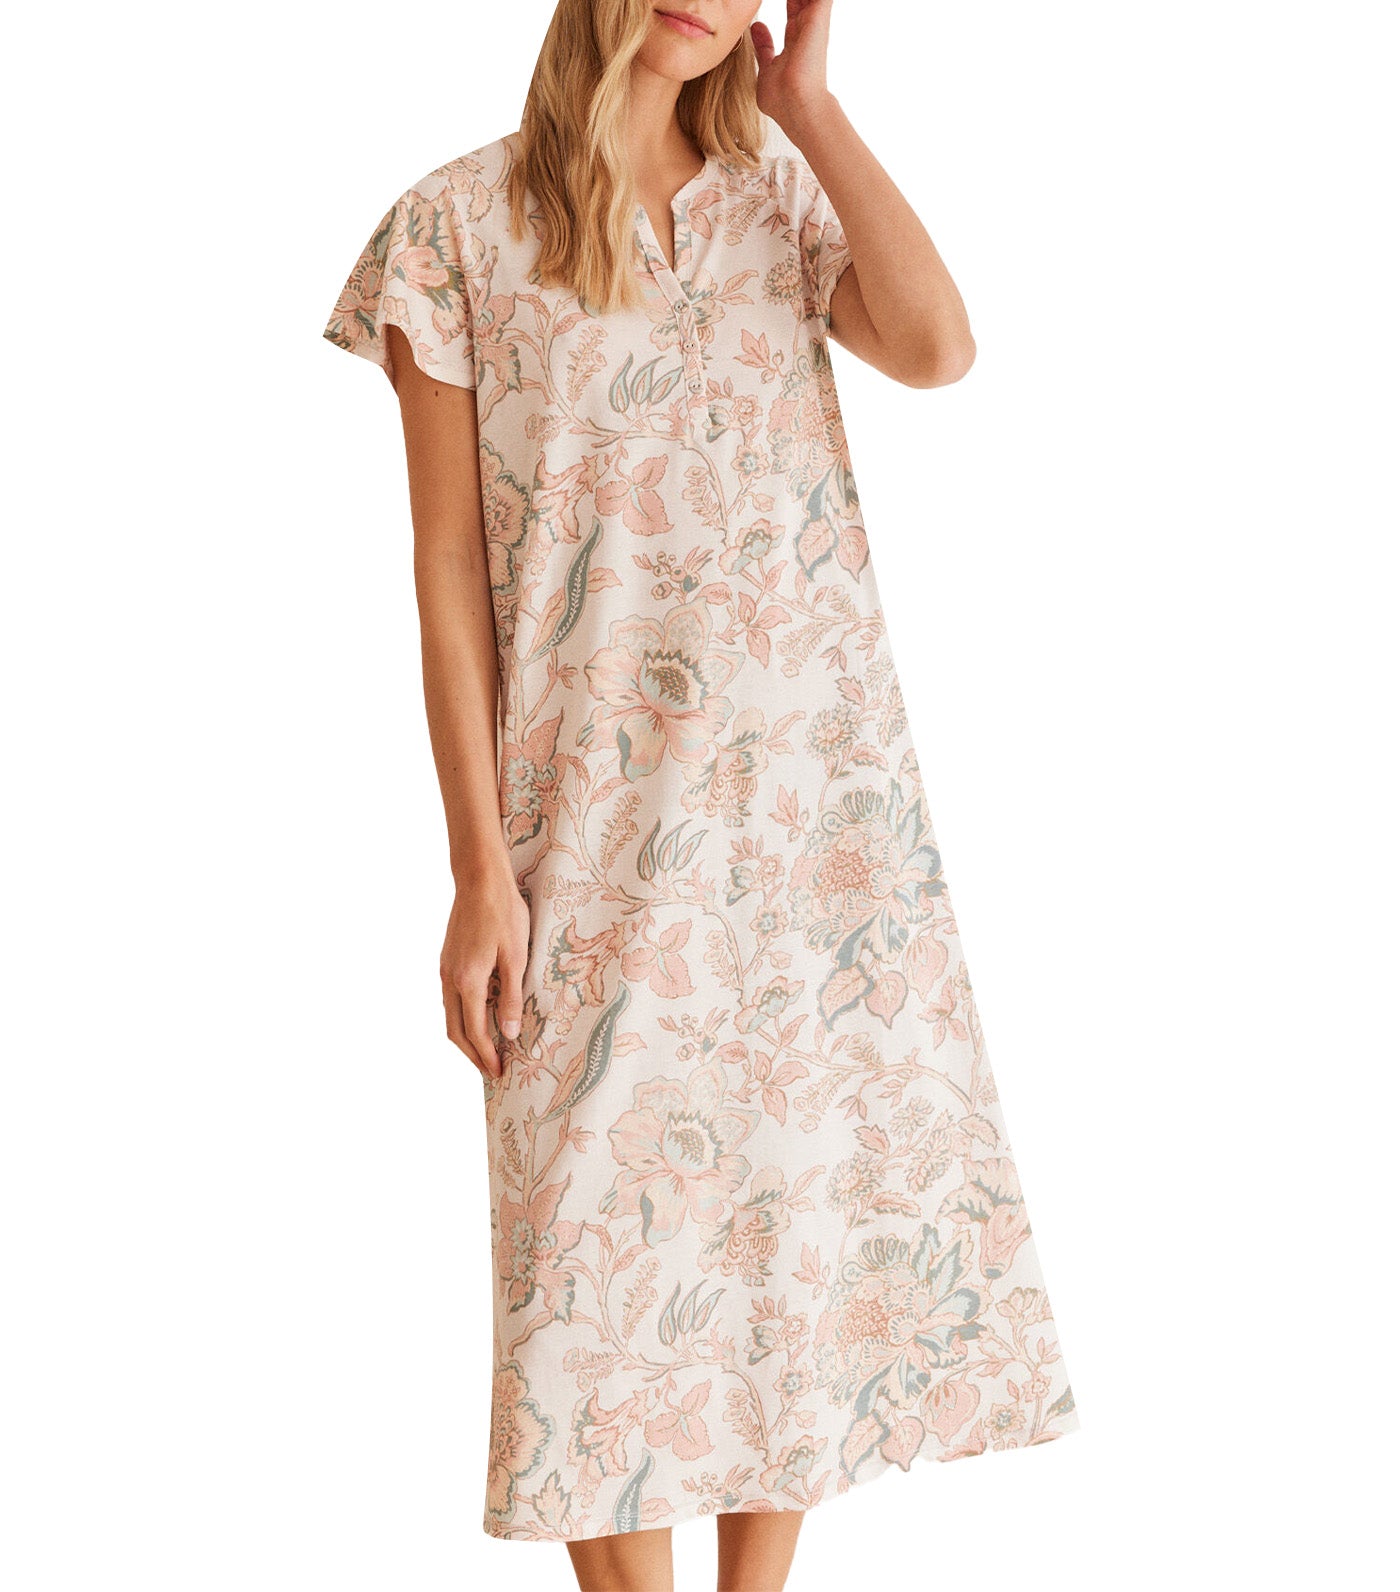 Floral Print Cotton Nightgown White